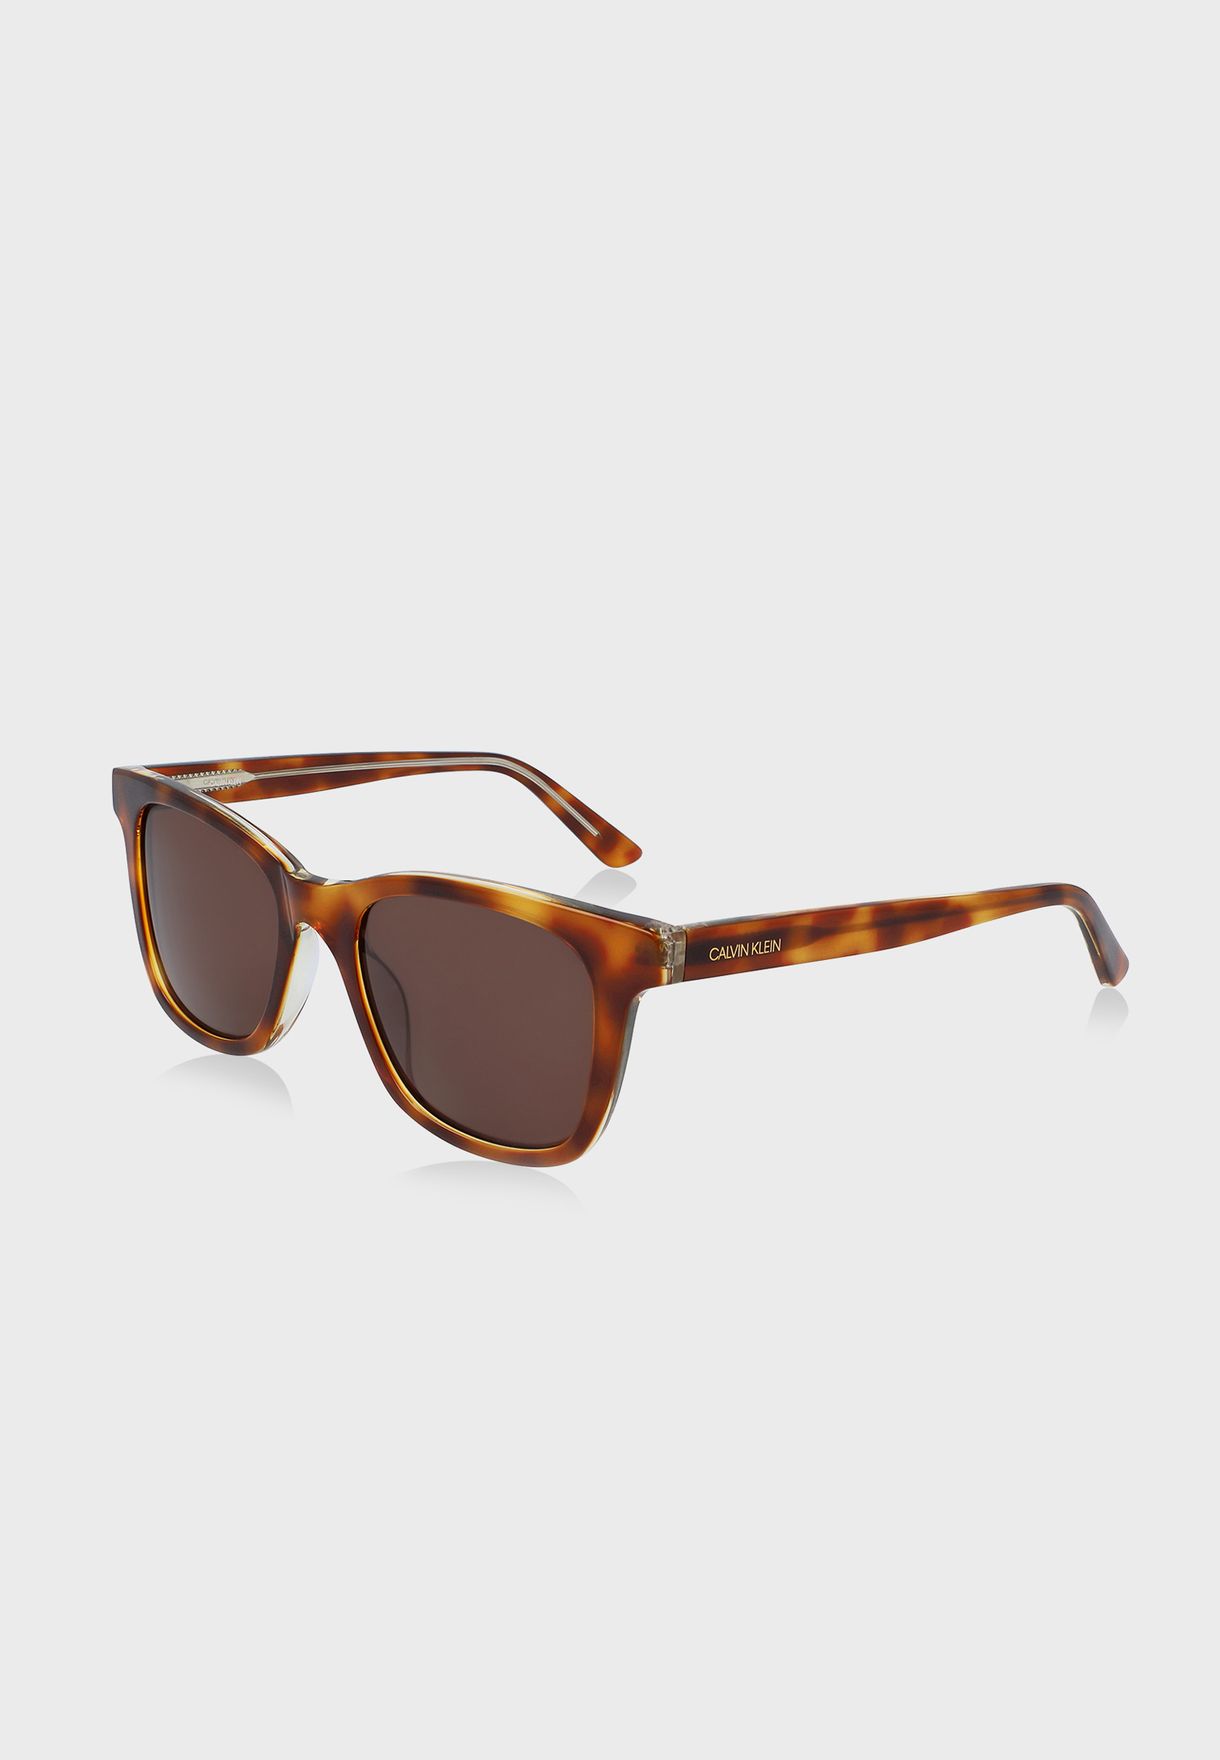 Ck20501S Wayfarer Sunglasses